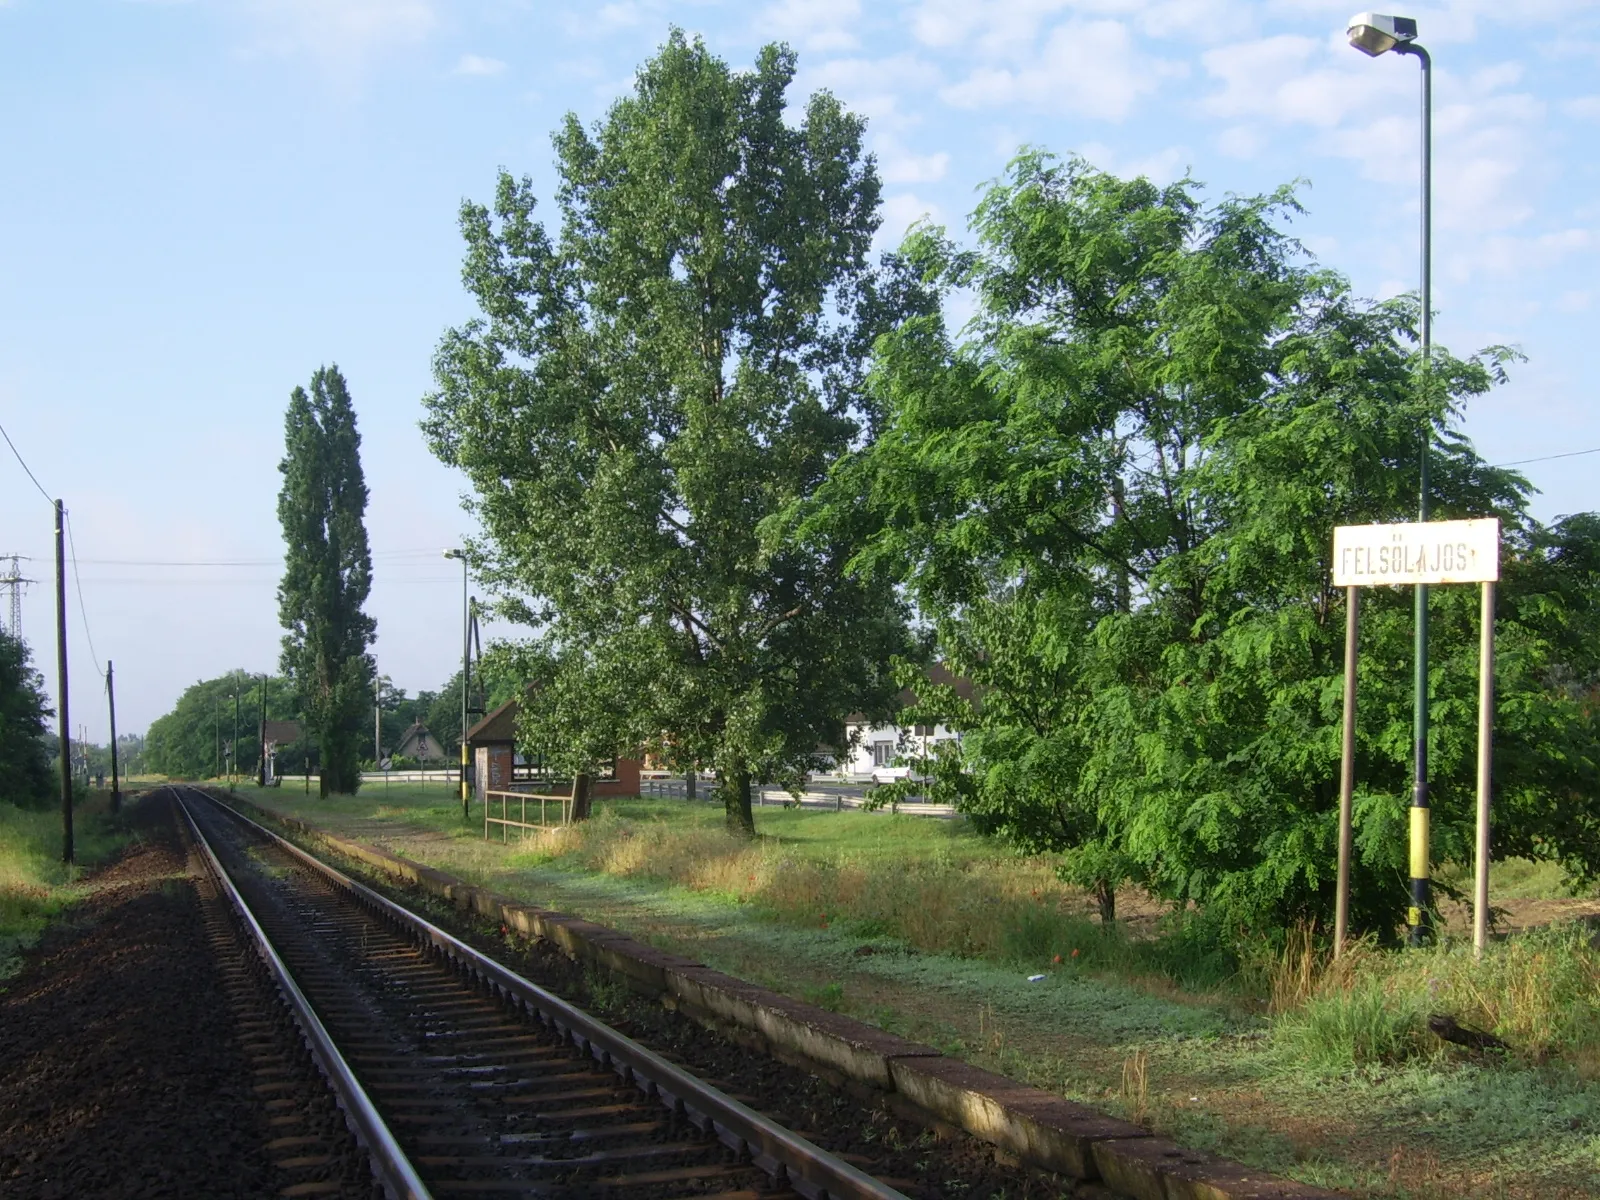 Photo showing: Felsőlajos train stop, Felsőlajos, Hungary